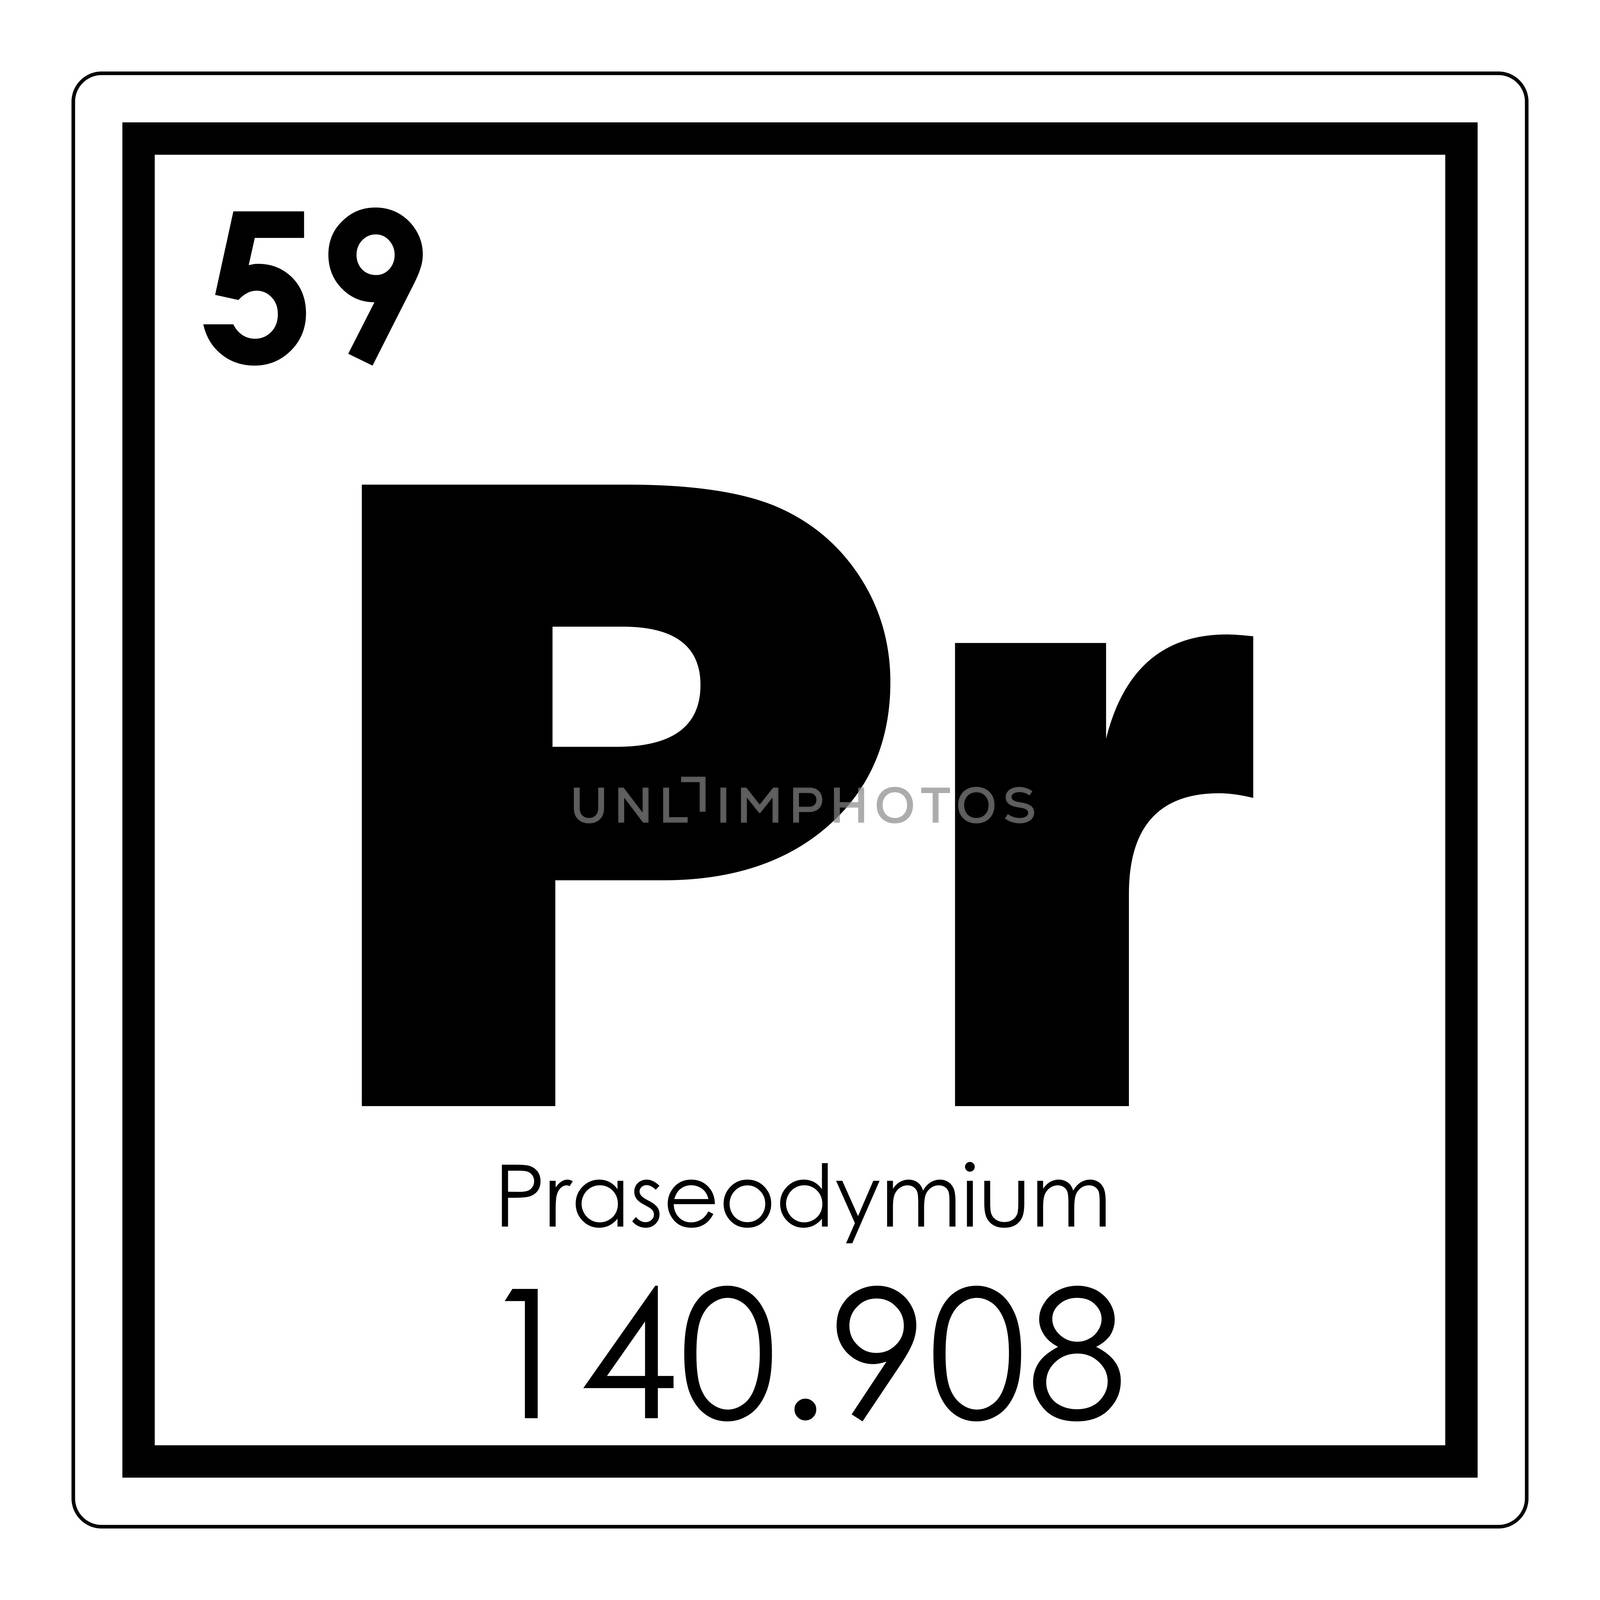 Praseodymium chemical element by tony4urban